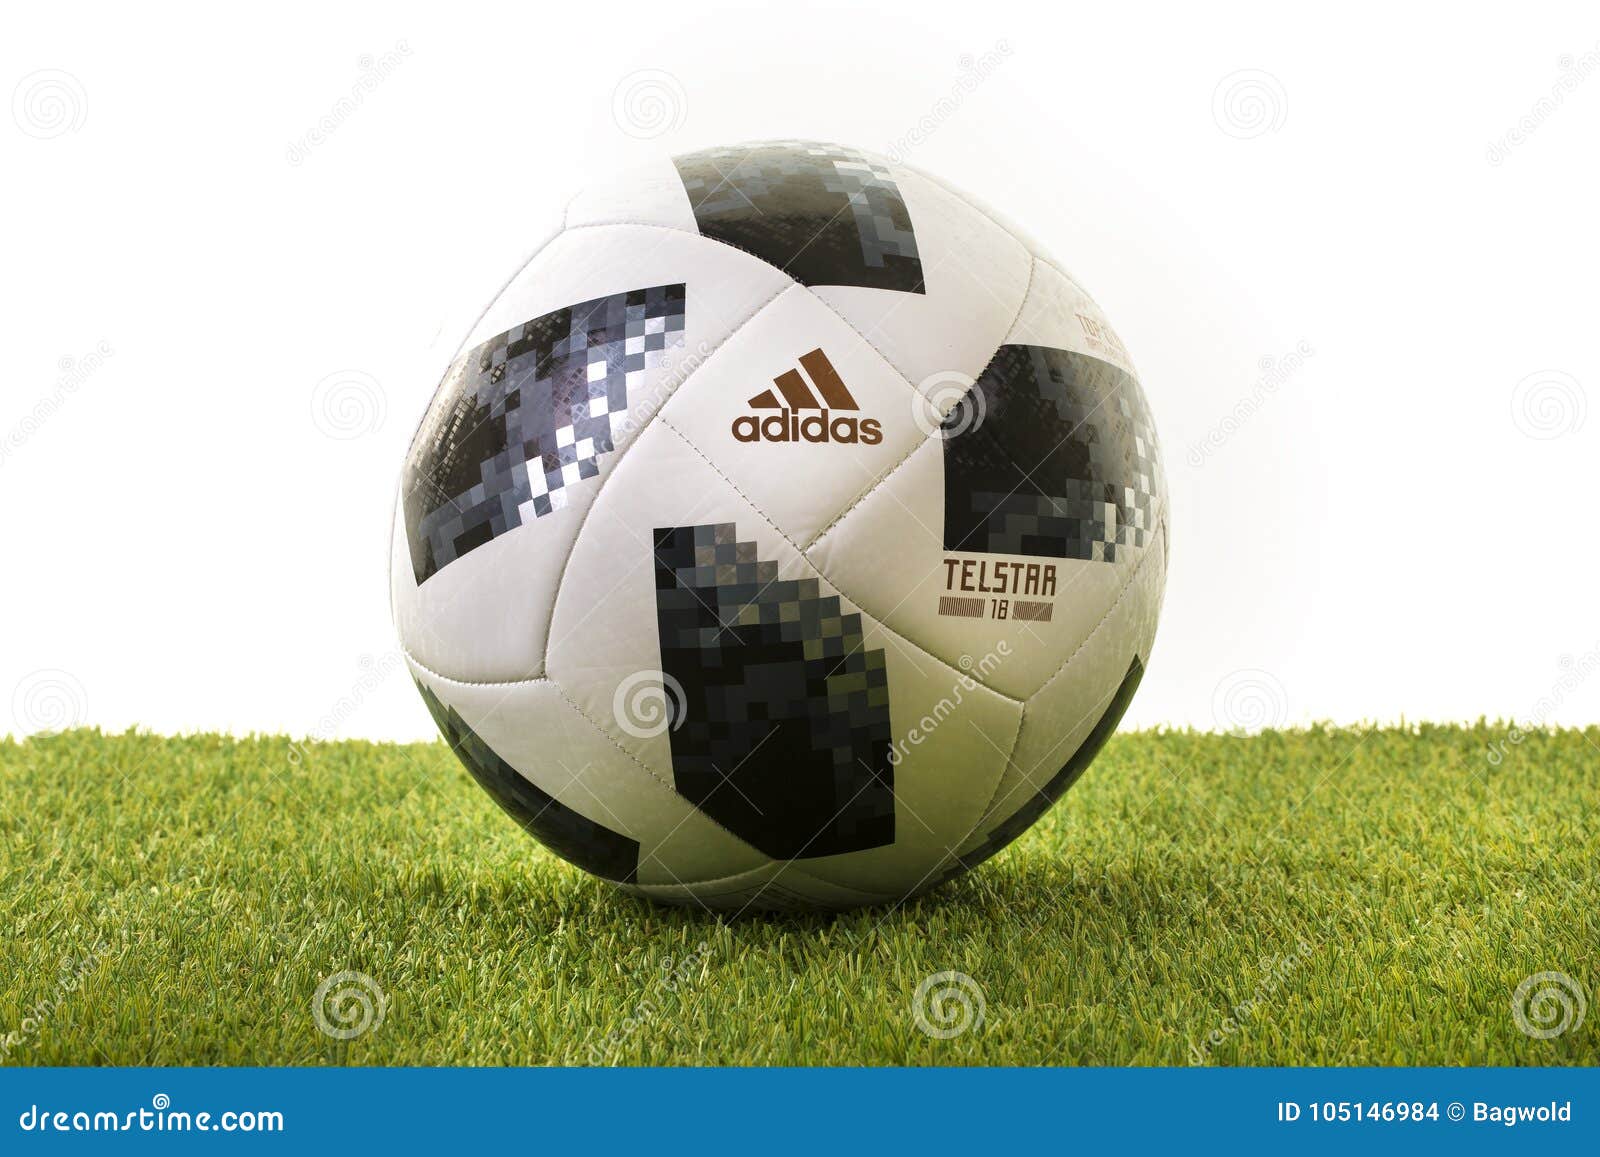 Adaptado Numérico Anoi Adidas Telstar Top Glider World Cup 2018 Football Editorial Stock Image -  Image of football, lustrative: 105146984